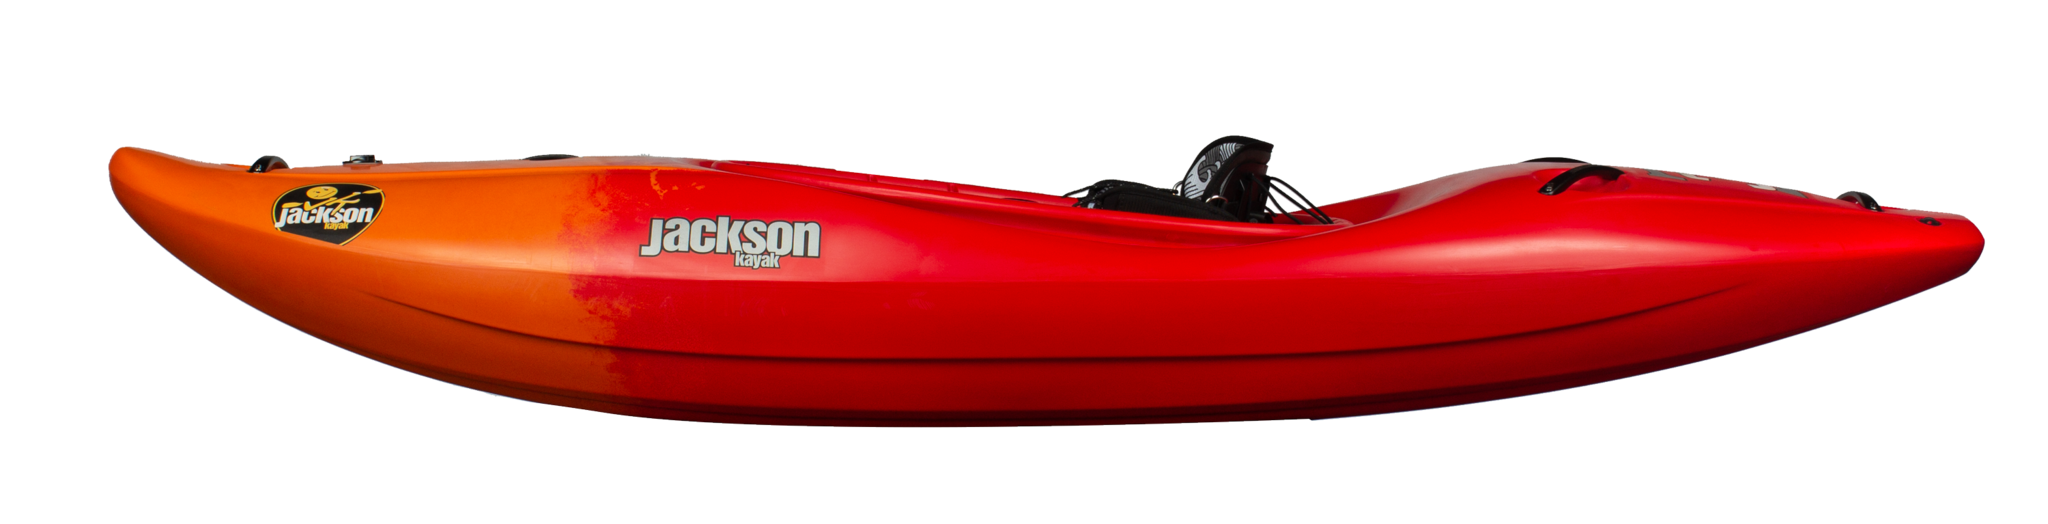 Jackson Kayak - Zen 3.0 - LG